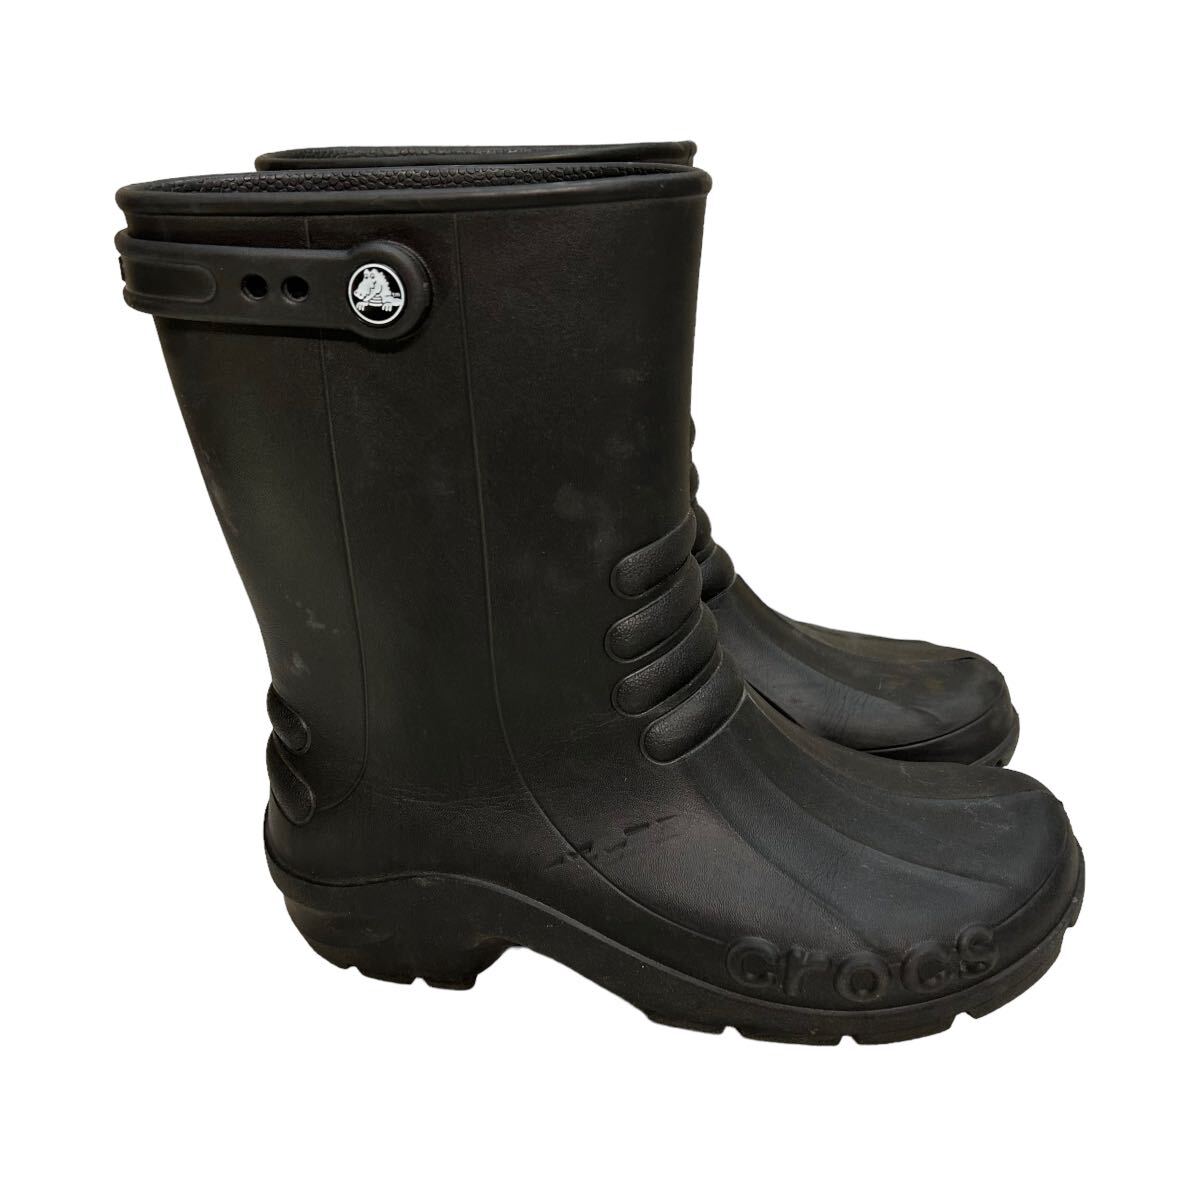 A480 crocs Crocs man and woman use rain boots boots M6 W8 approximately 24cm Black Raver 